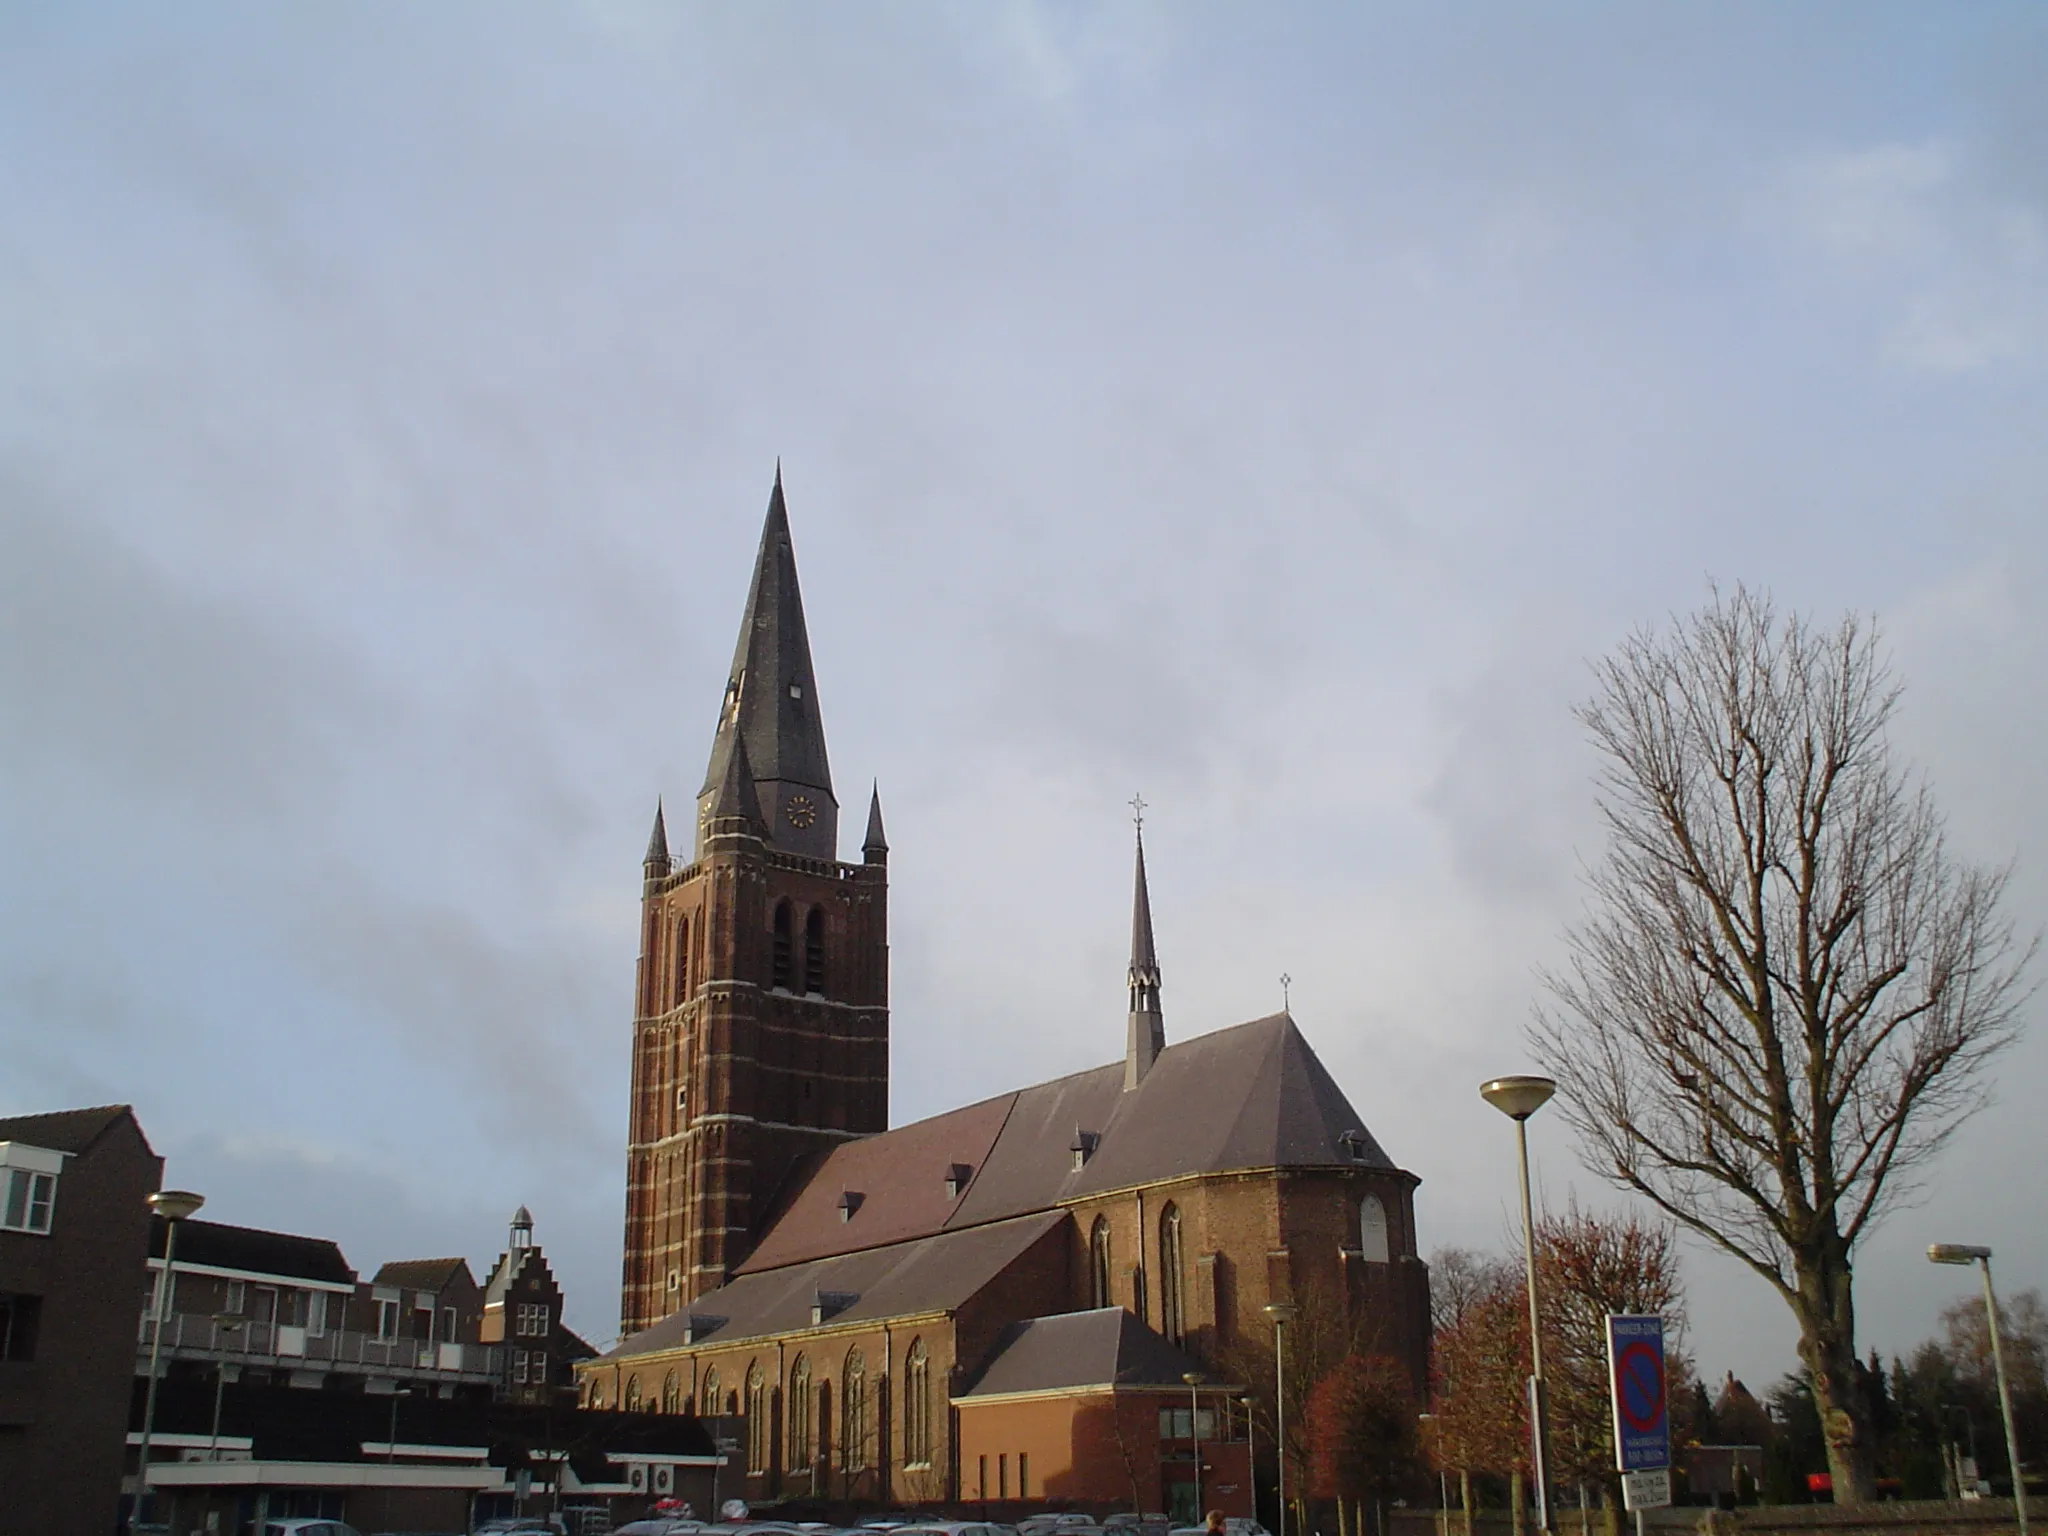 Photo showing: The St. Lambertuschurch in Nederweert, the Netherlands